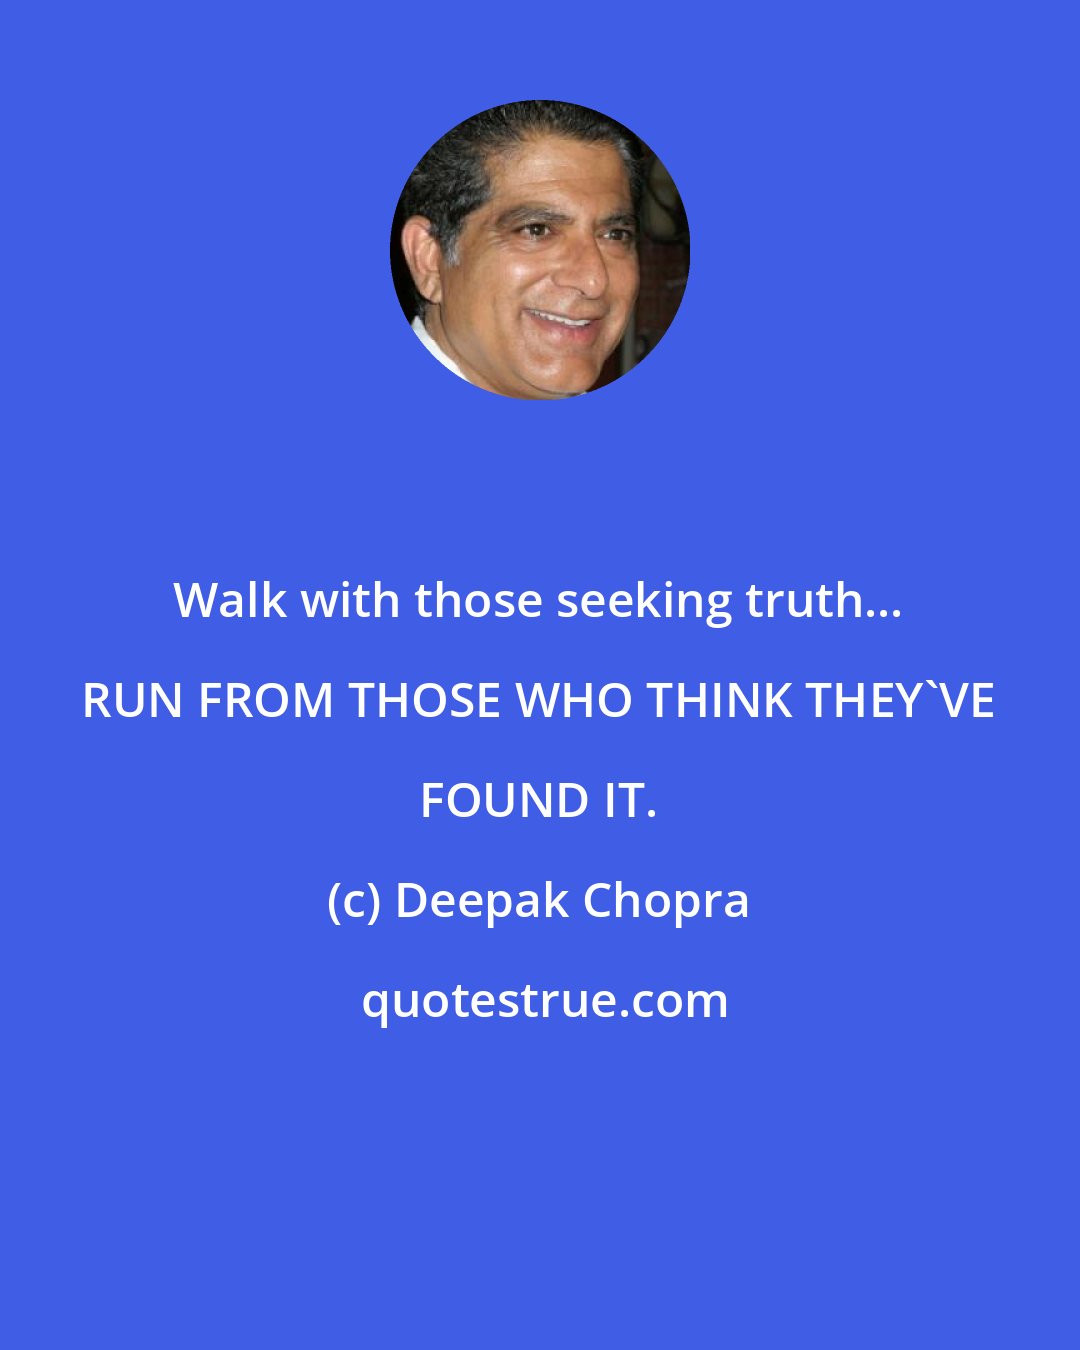 Deepak Chopra: Walk with those seeking truth... RUN FROM THOSE WHO THINK THEY'VE FOUND IT.